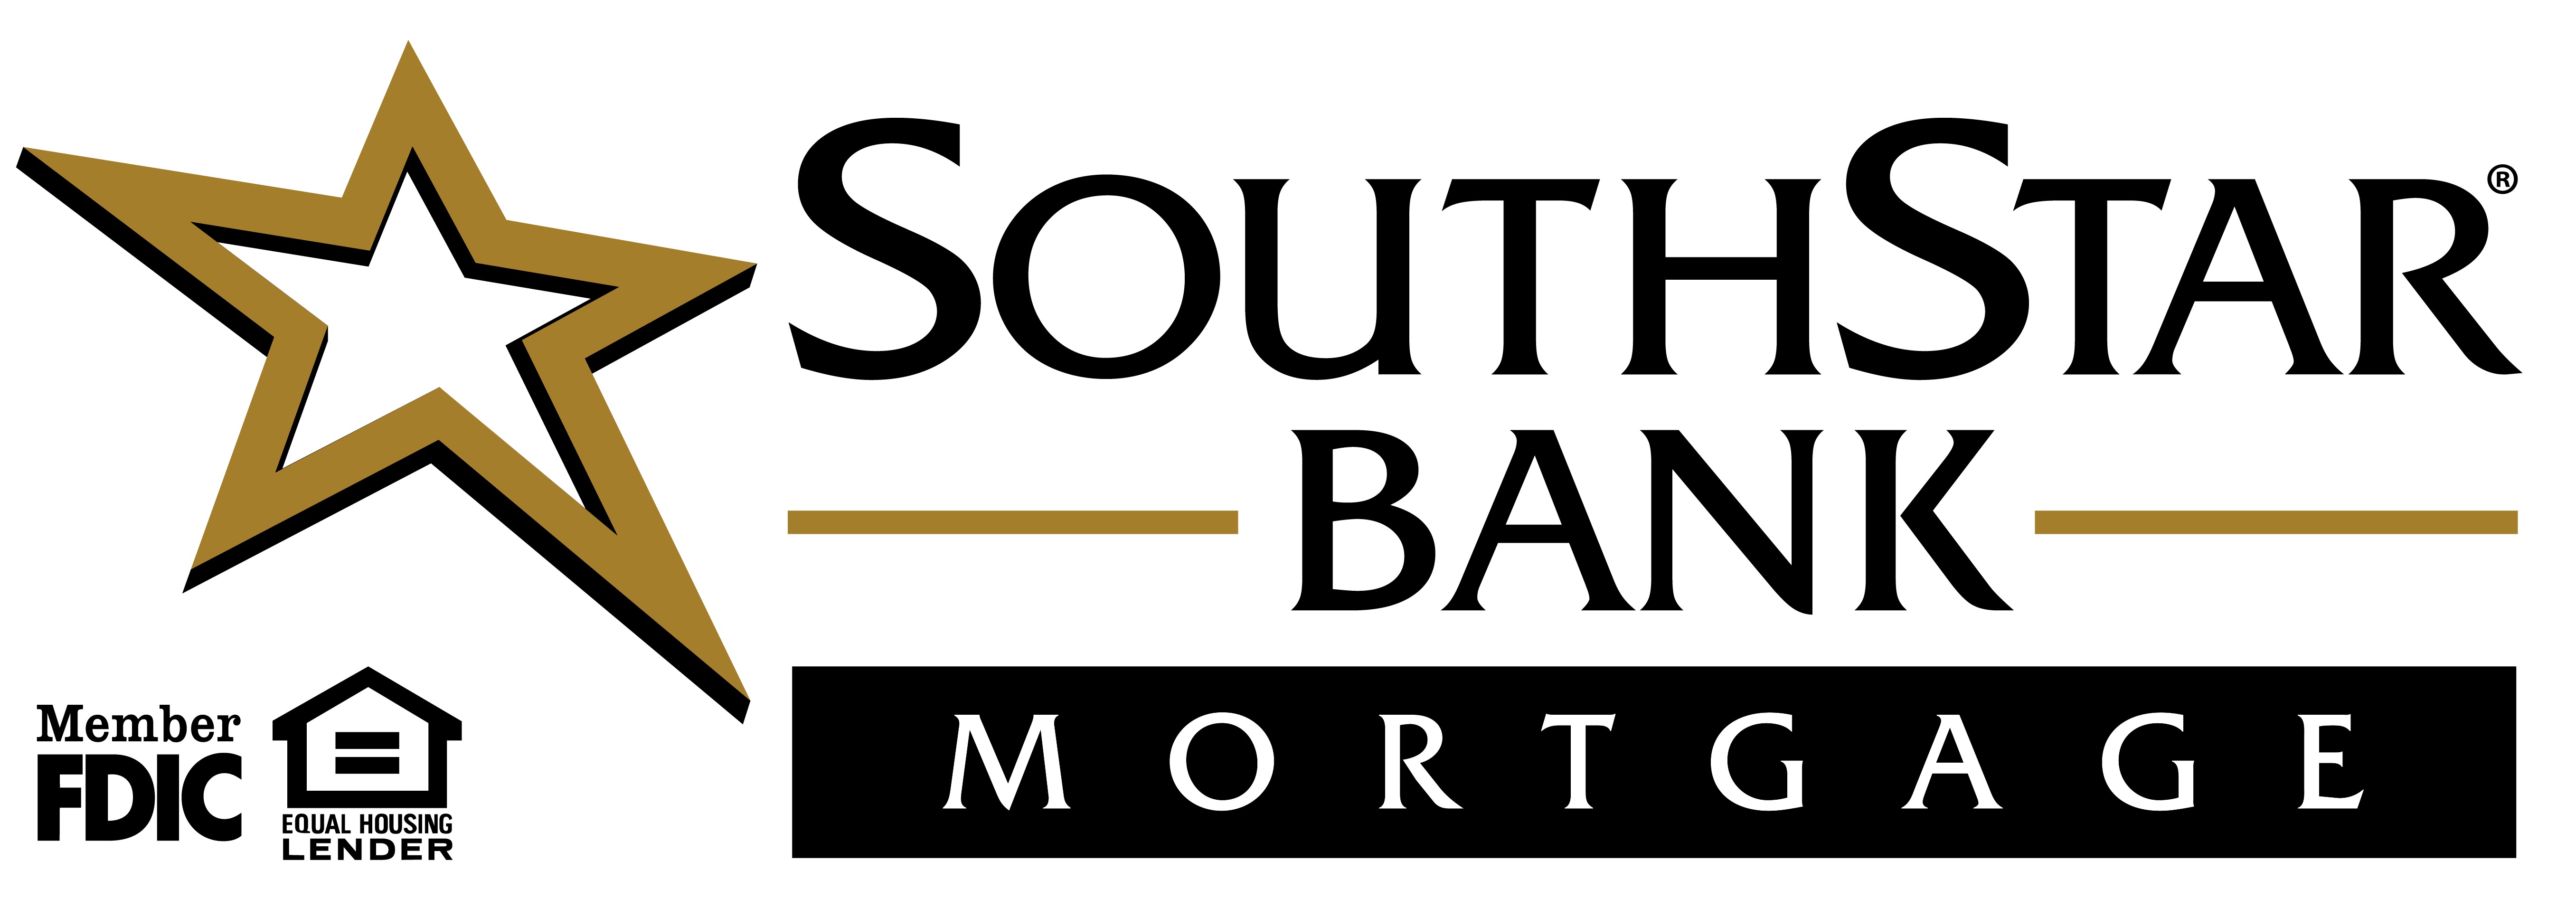 SouthStar Bank Mortgage Logo.jpg